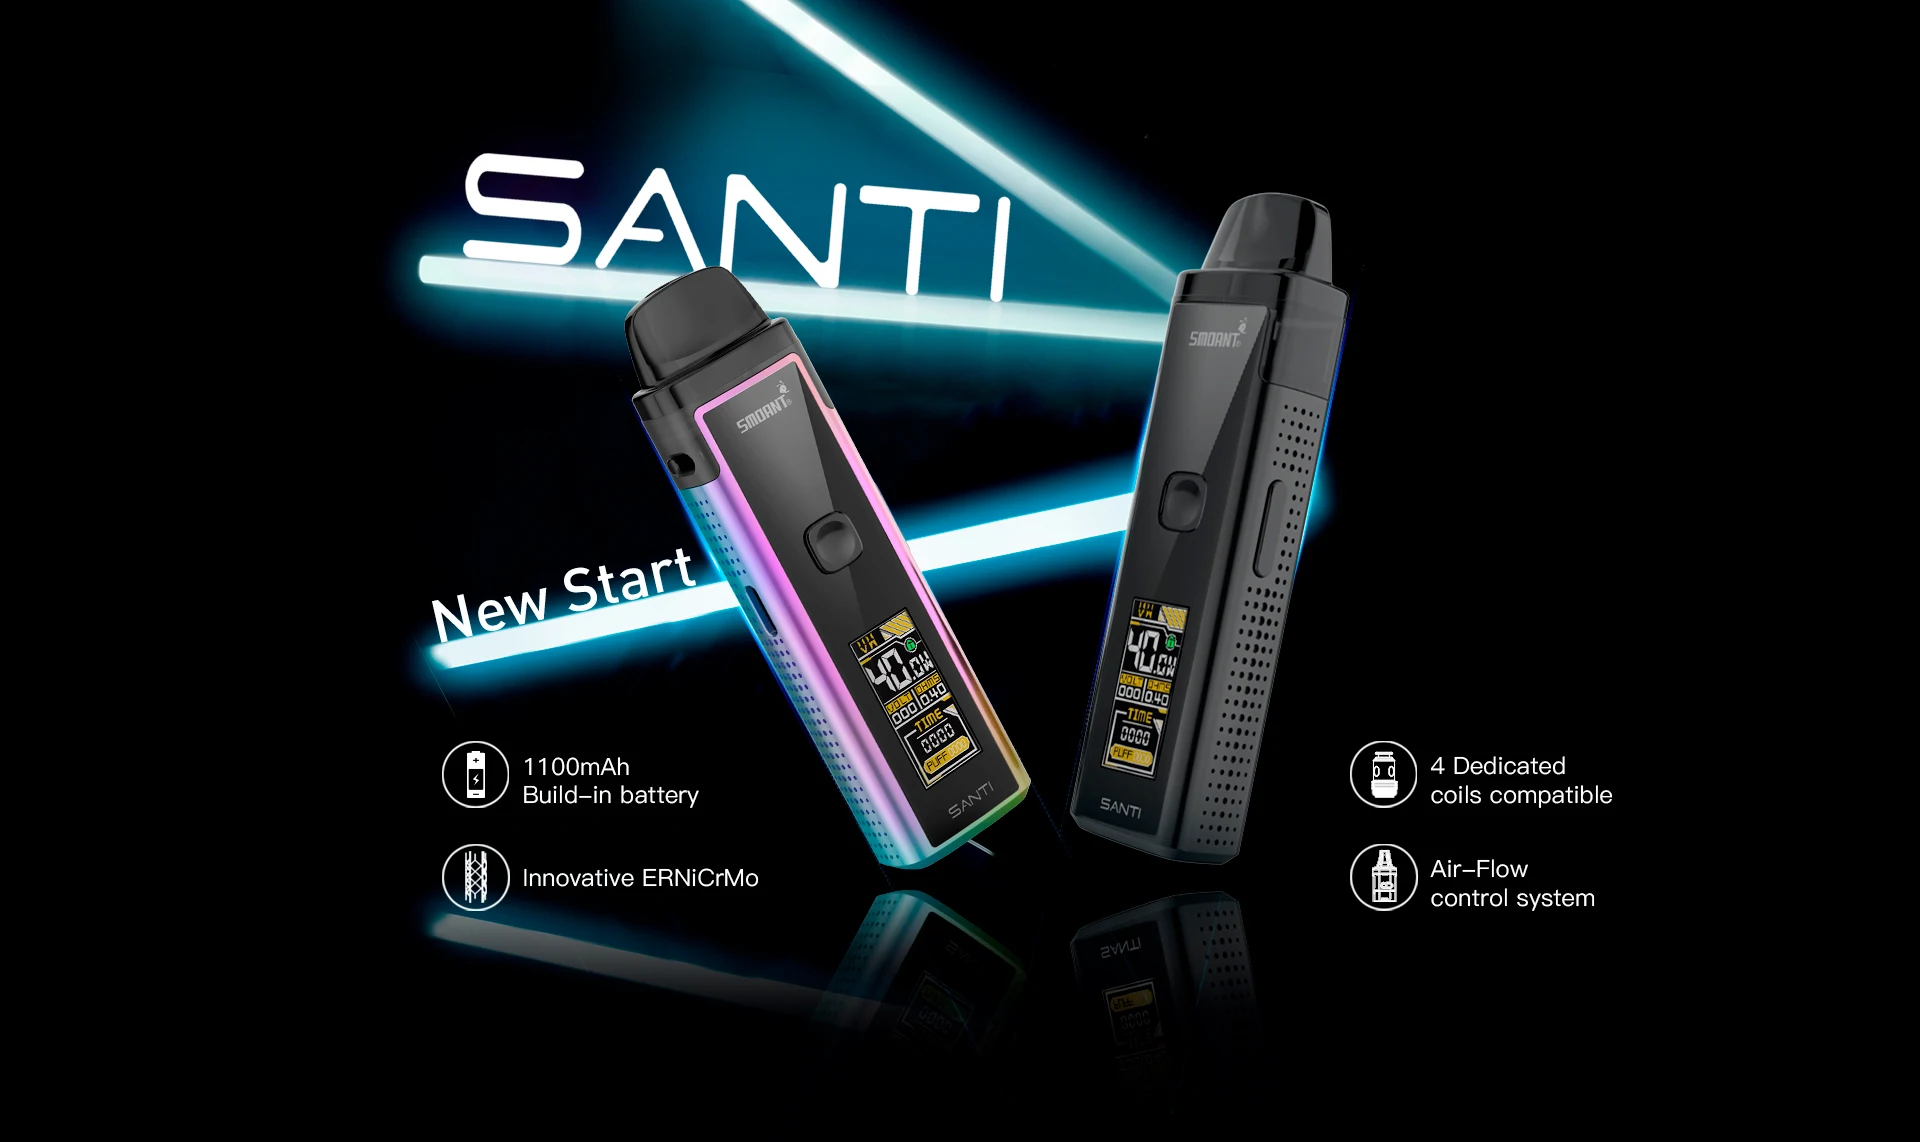 Tanio Oryginalny Smoant SANTI Kit 40W Vape 1100mAh bateria 3.5ML sklep